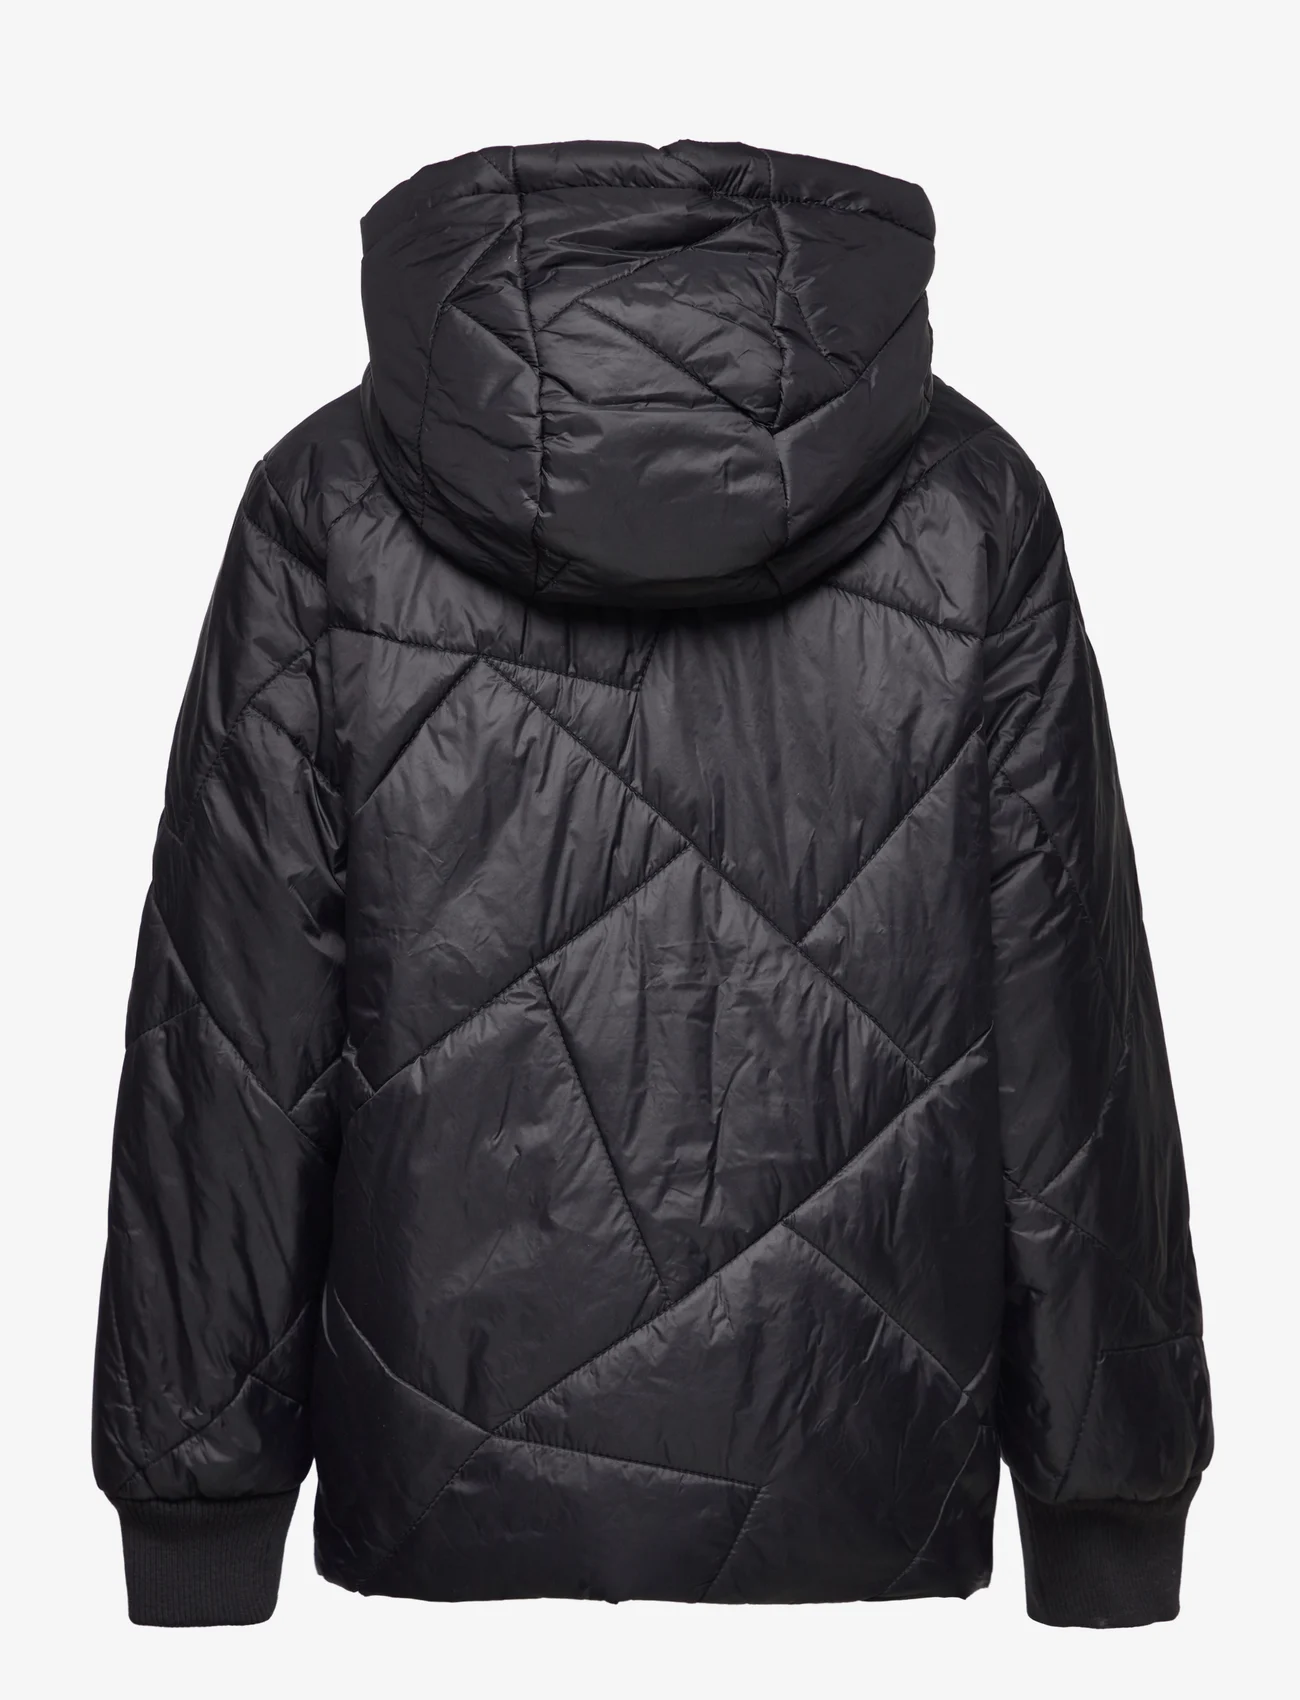 FILA - TULLNERFELD padded jacket - insulated jackets - moonless night - 1